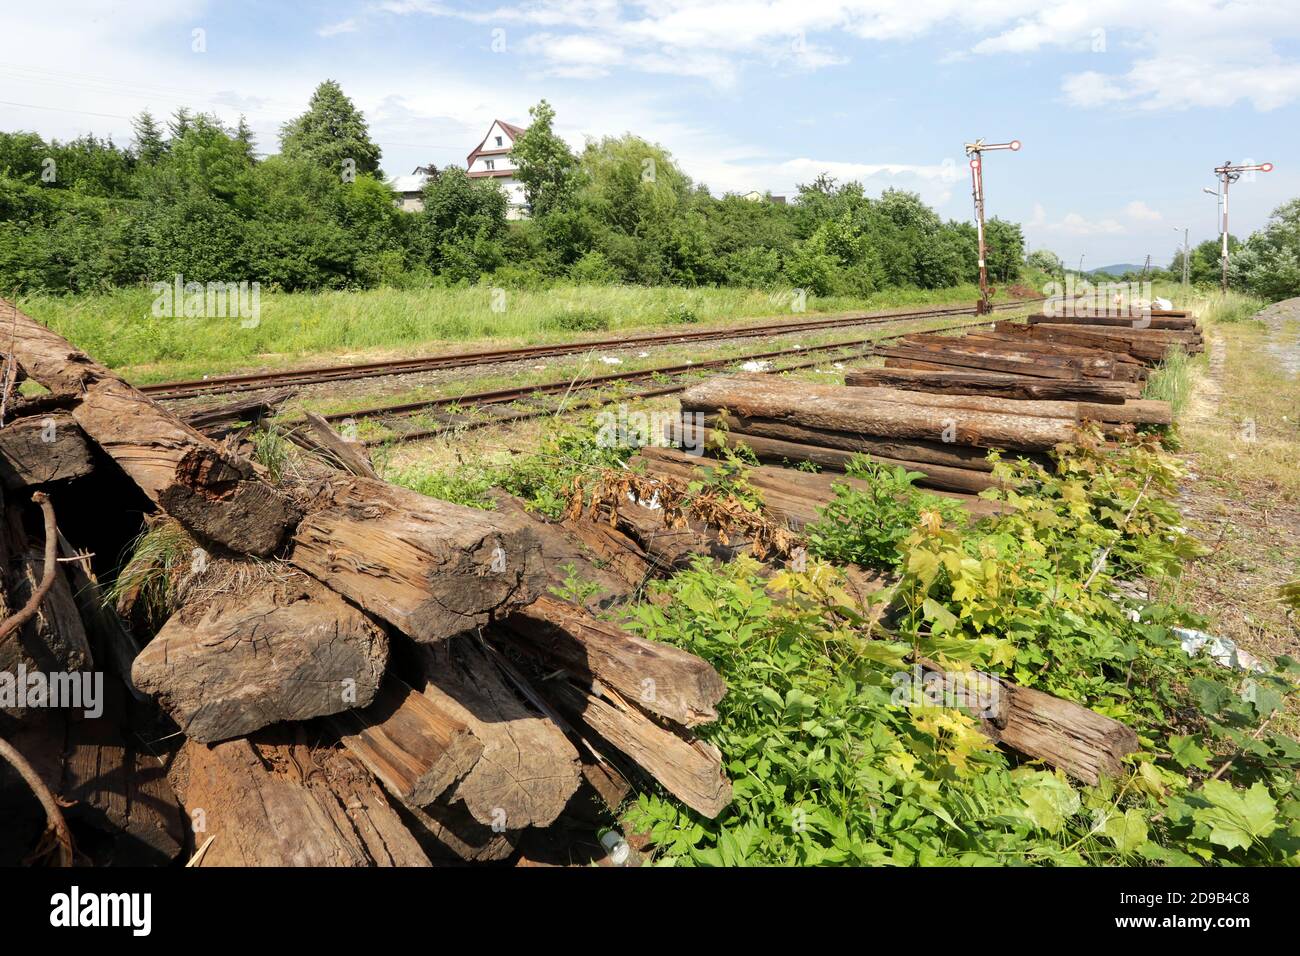 Dobra. Poland. The pile of worn old railwaily sleepers stacked near the railway track. Stock Photo